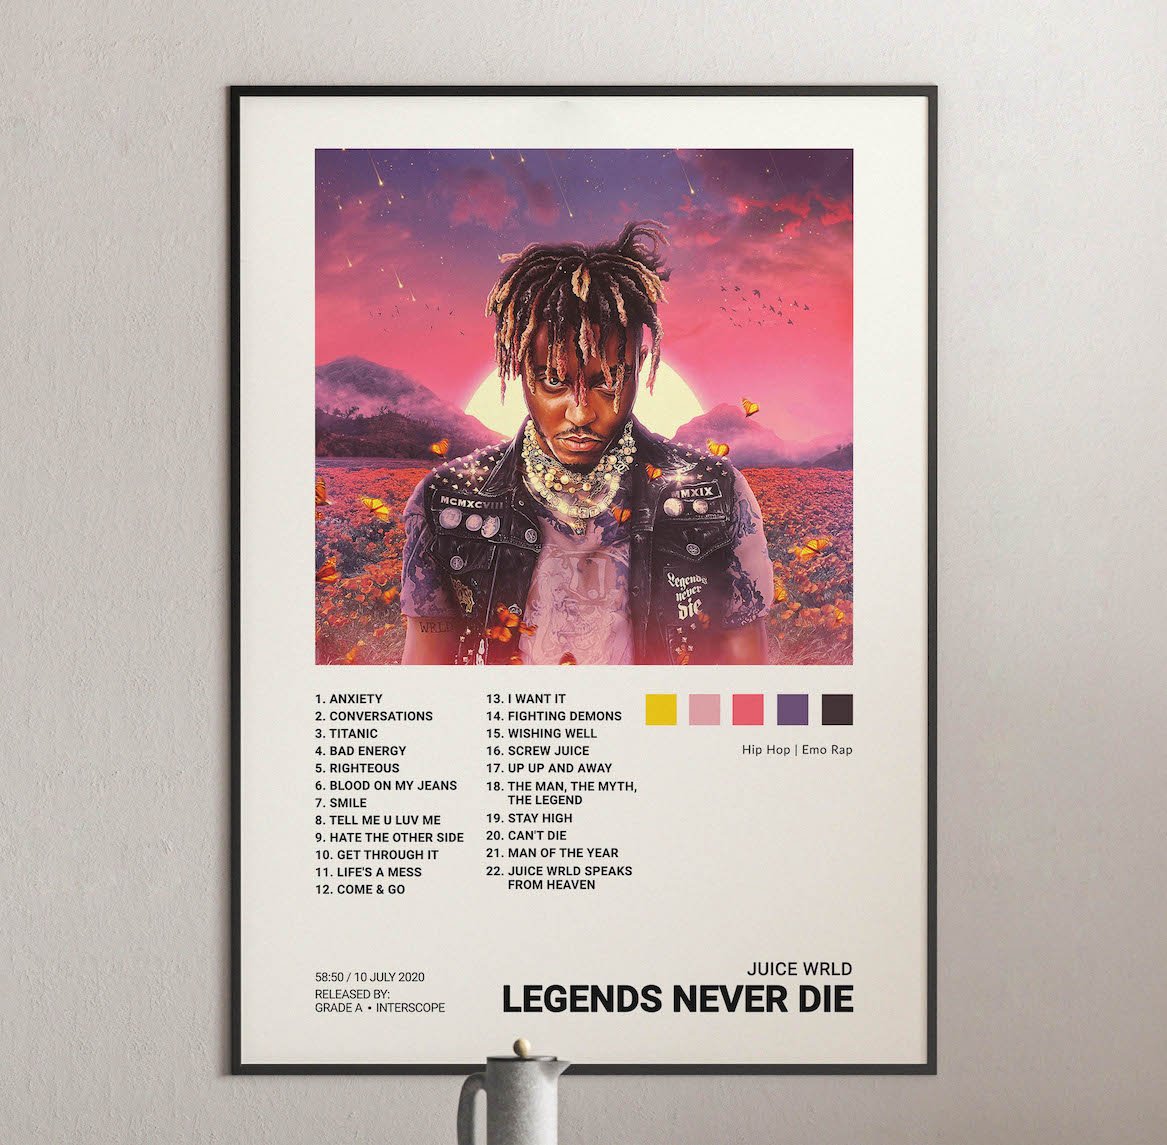 Juice WRLD Legends Never Die New Album Cover Poster 